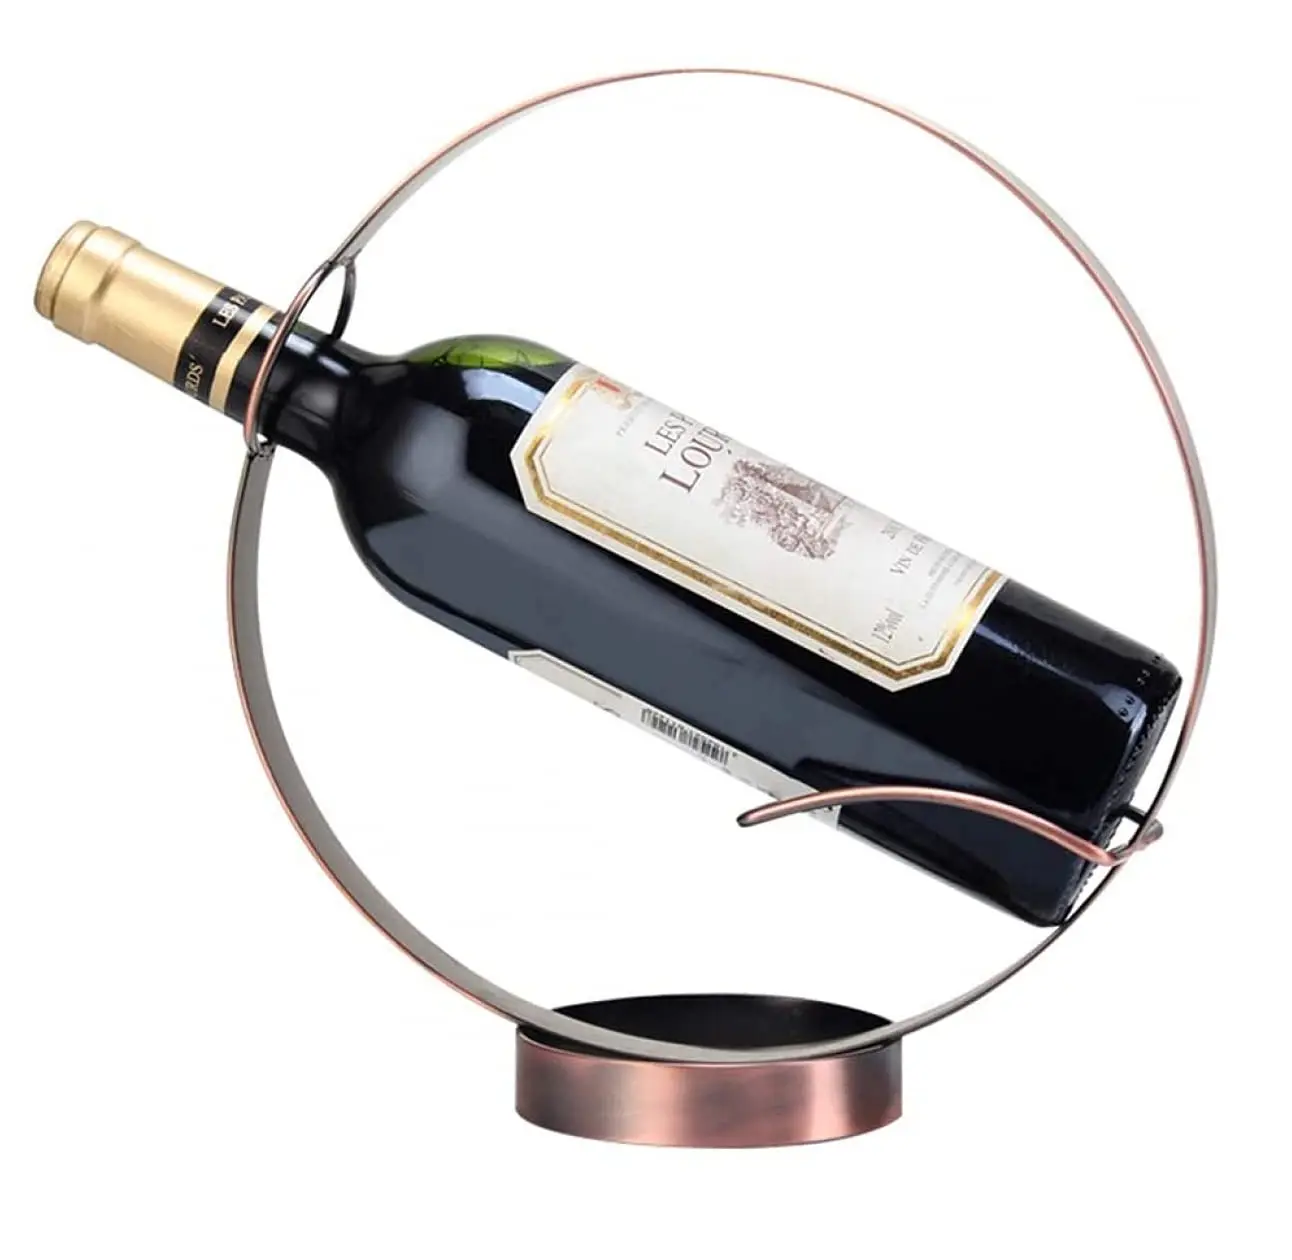 Porta vino in metallo porta portabottiglie vino porta portabottiglie vino forma rotonda per feste teatrali Bar